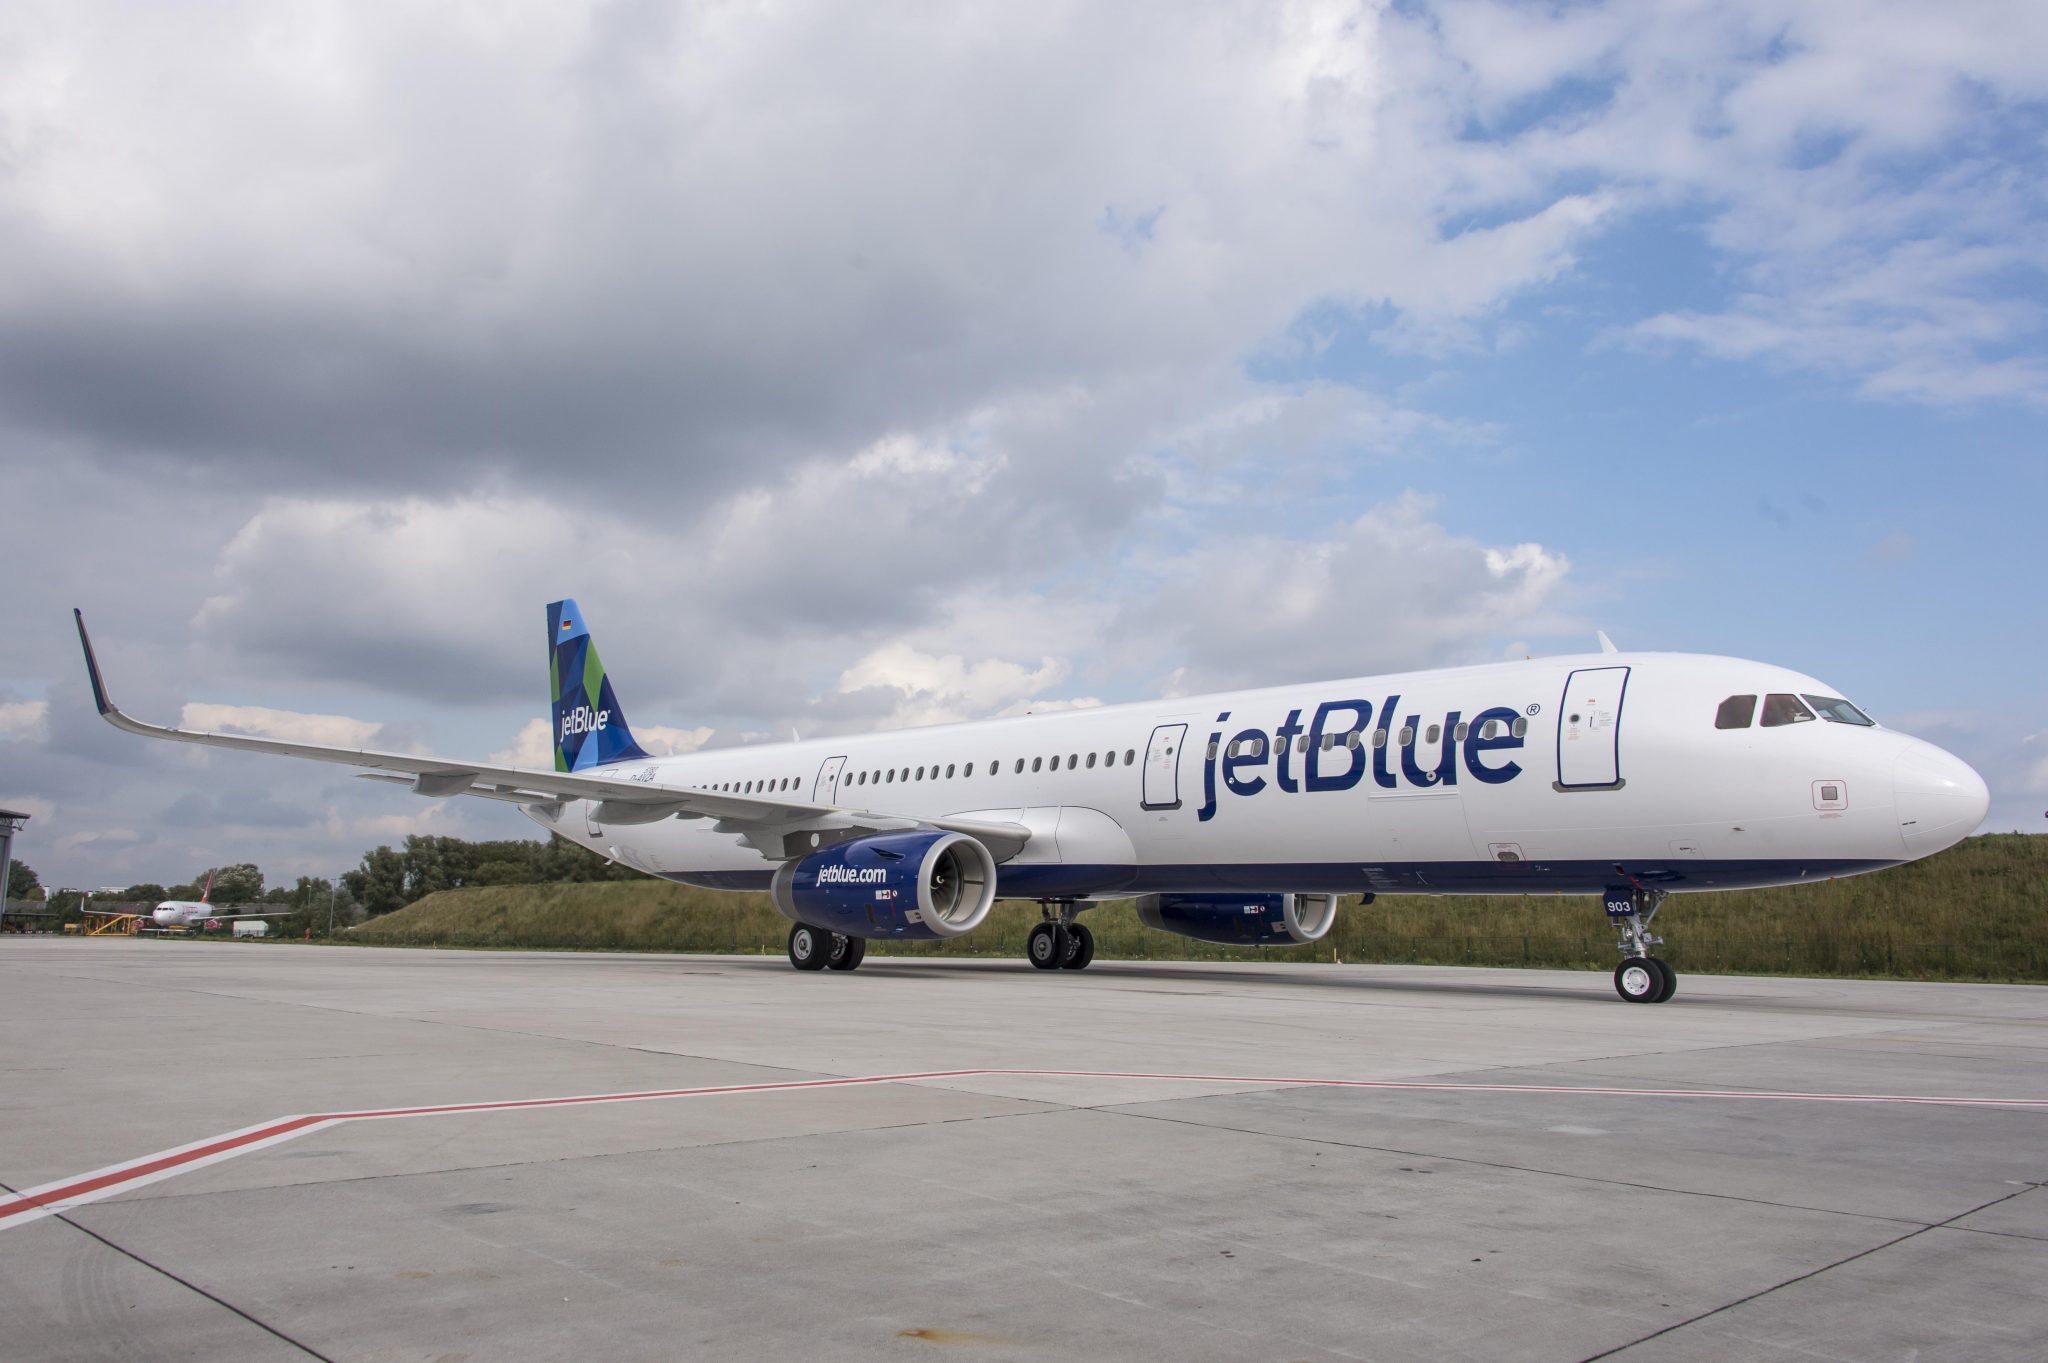 JetBlue flies to San Antonio from New York and Boston